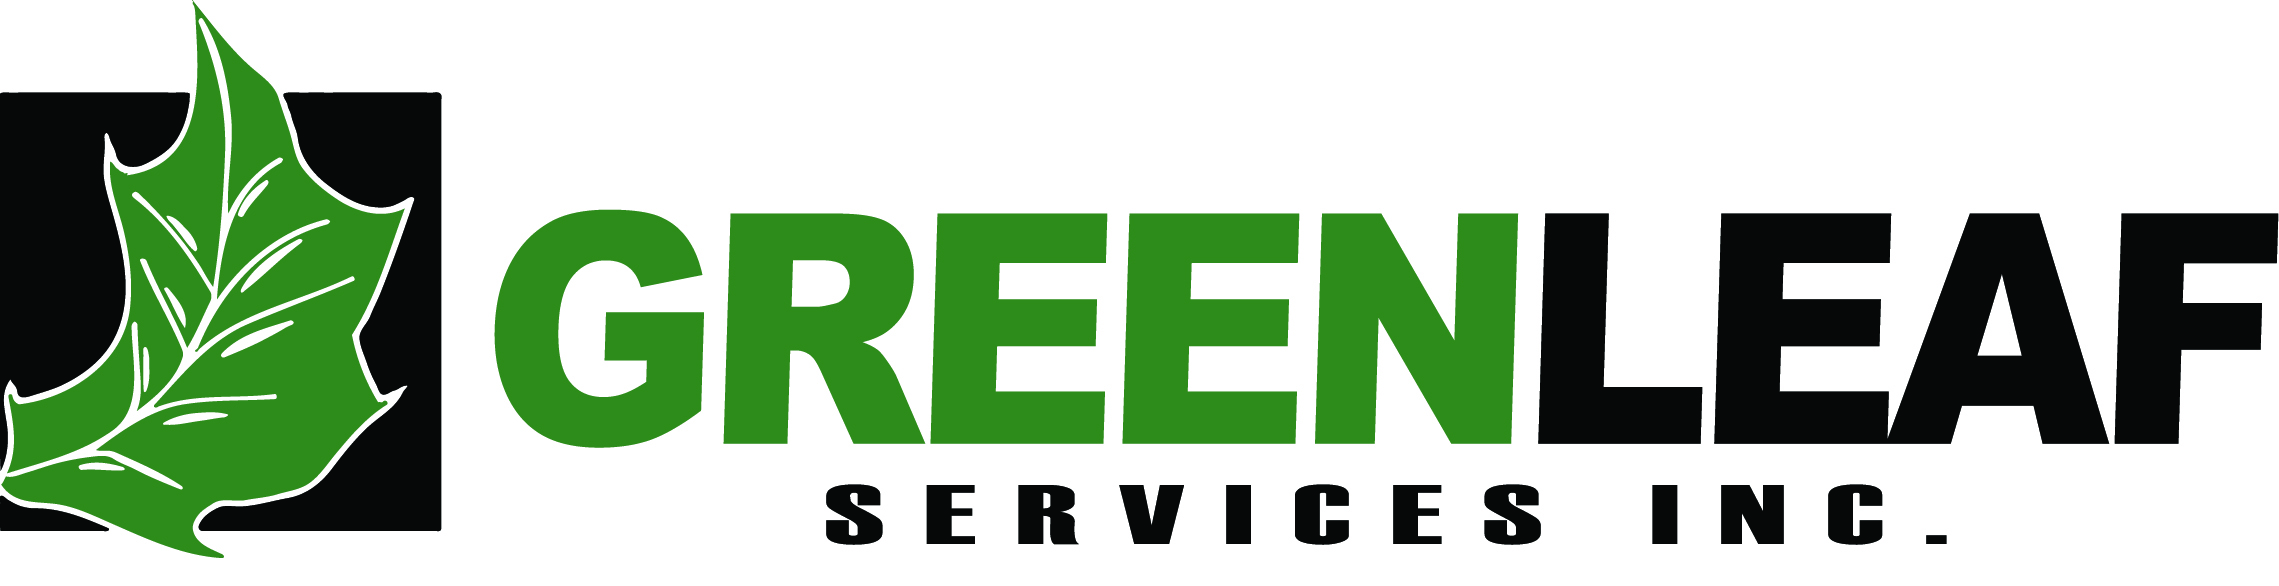 Greenleaf Services, Inc.